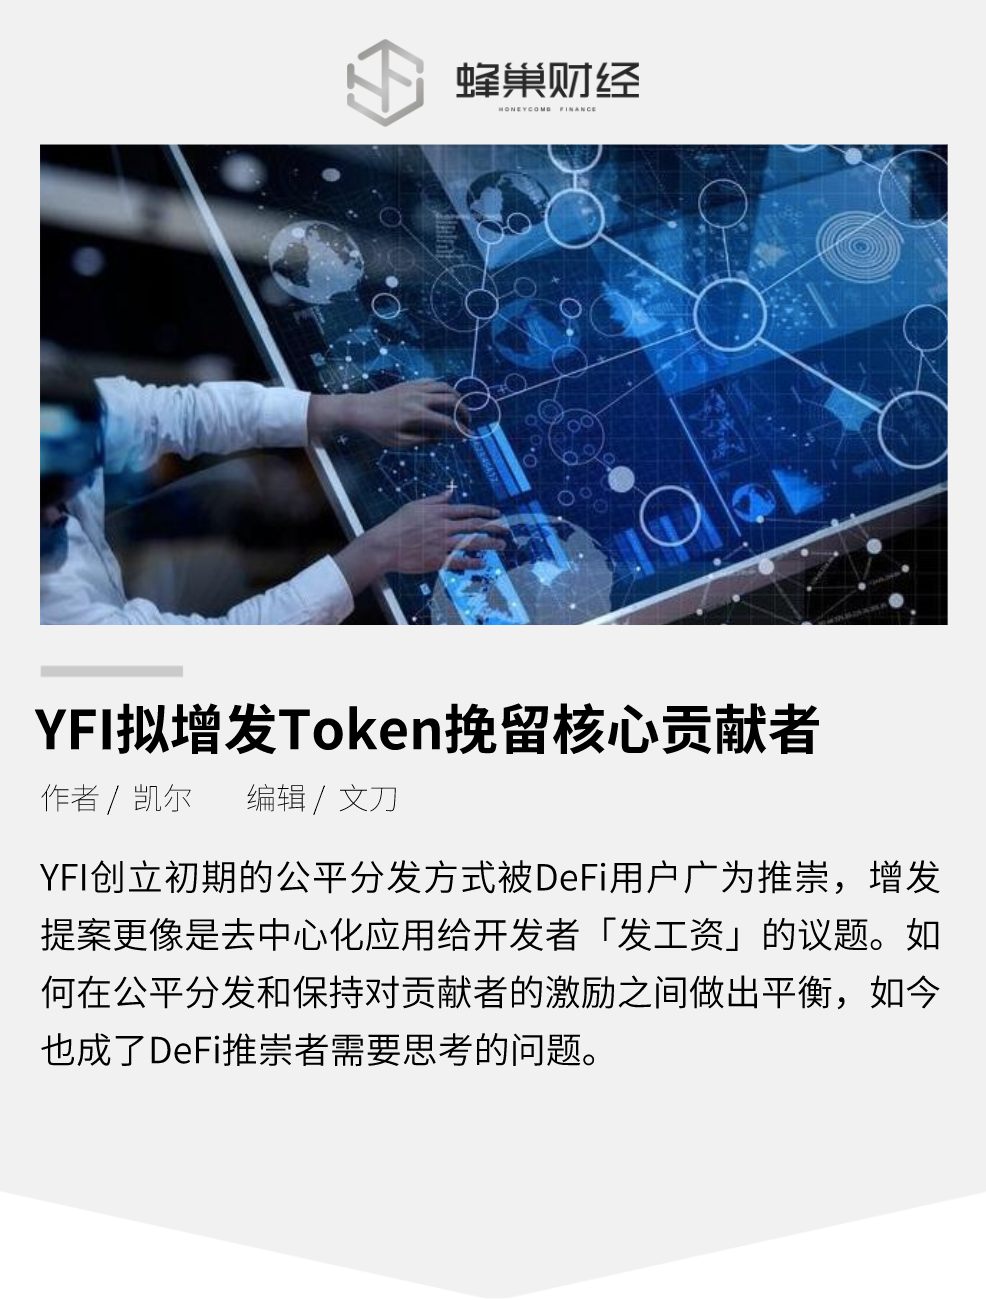 YFI 拟增发 Token，能否挽留核心贡献者？